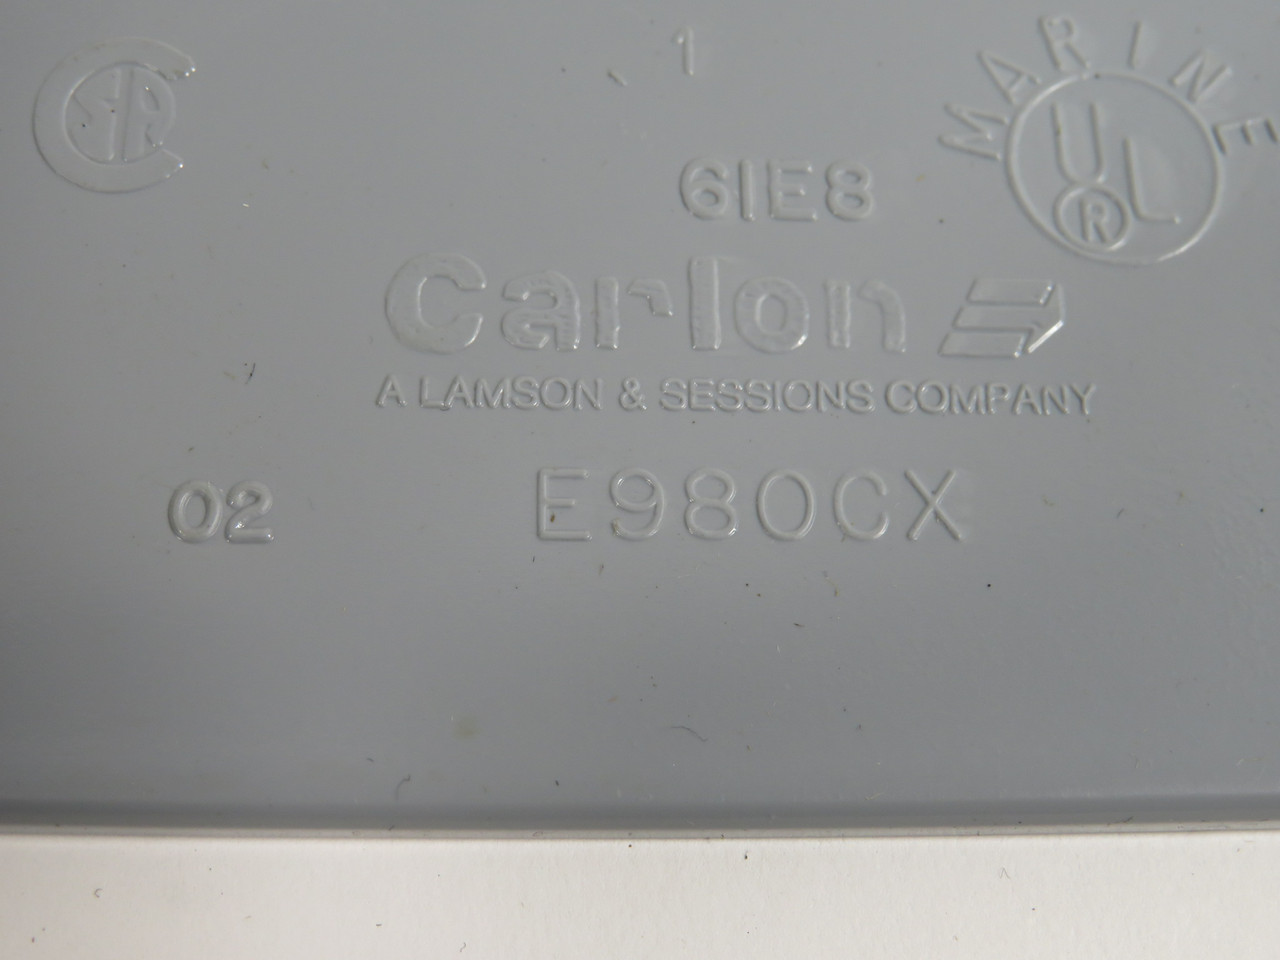 Carlon C980CN Nonmetallic Weatherproof 1-Gang Blank Cover Plate E980CX NOP